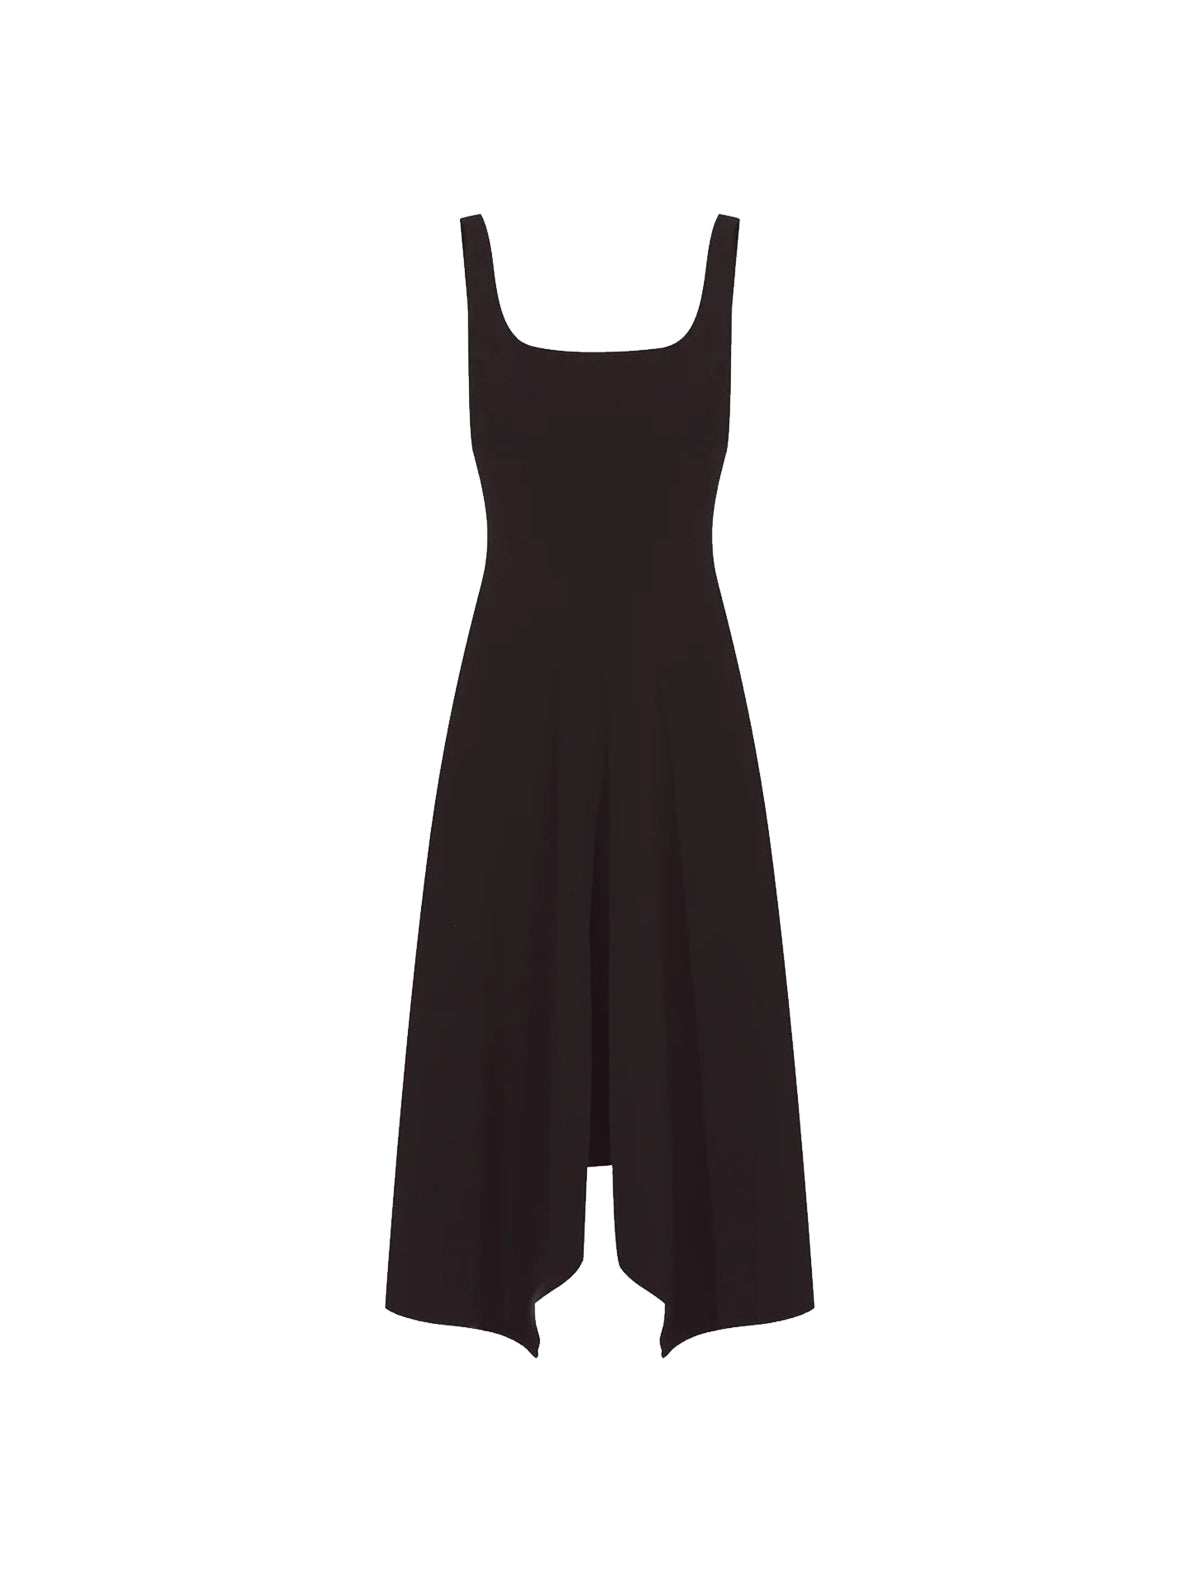 PROENZA SCHOULER WHITE LABEL Barre Aymmetrical Knit Dress in Black